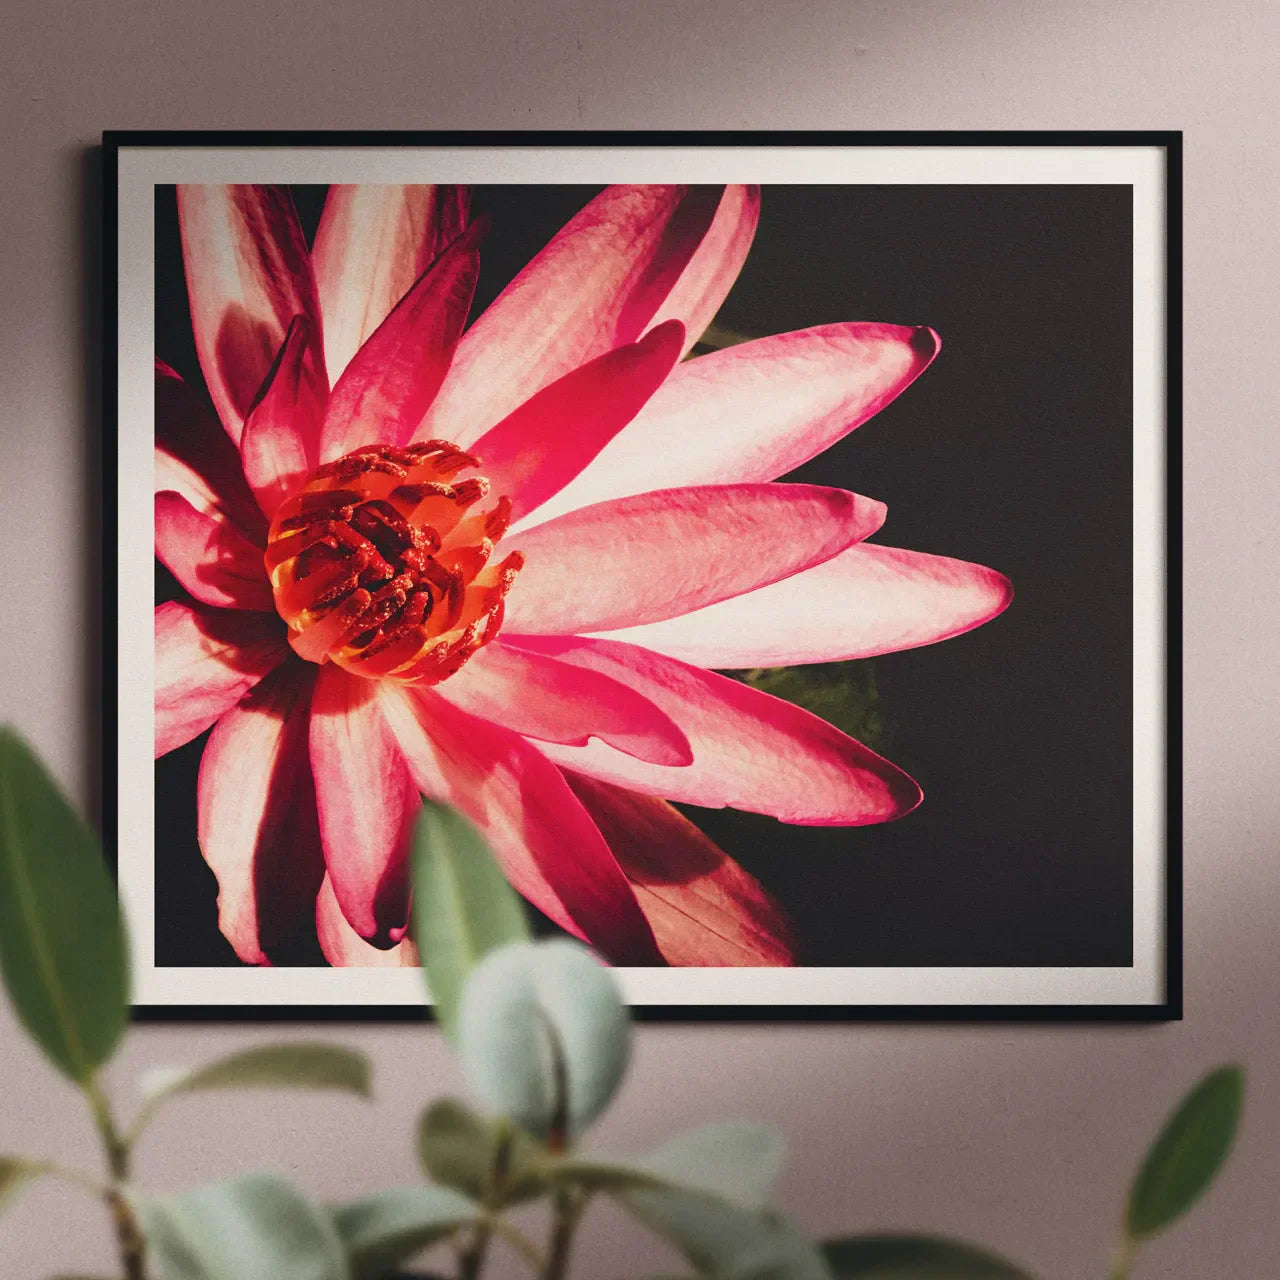 Casanova - Pink Red Lotus Flower Photography Framed Print - Posters Prints & Visual Artwork - Aesthetic Art